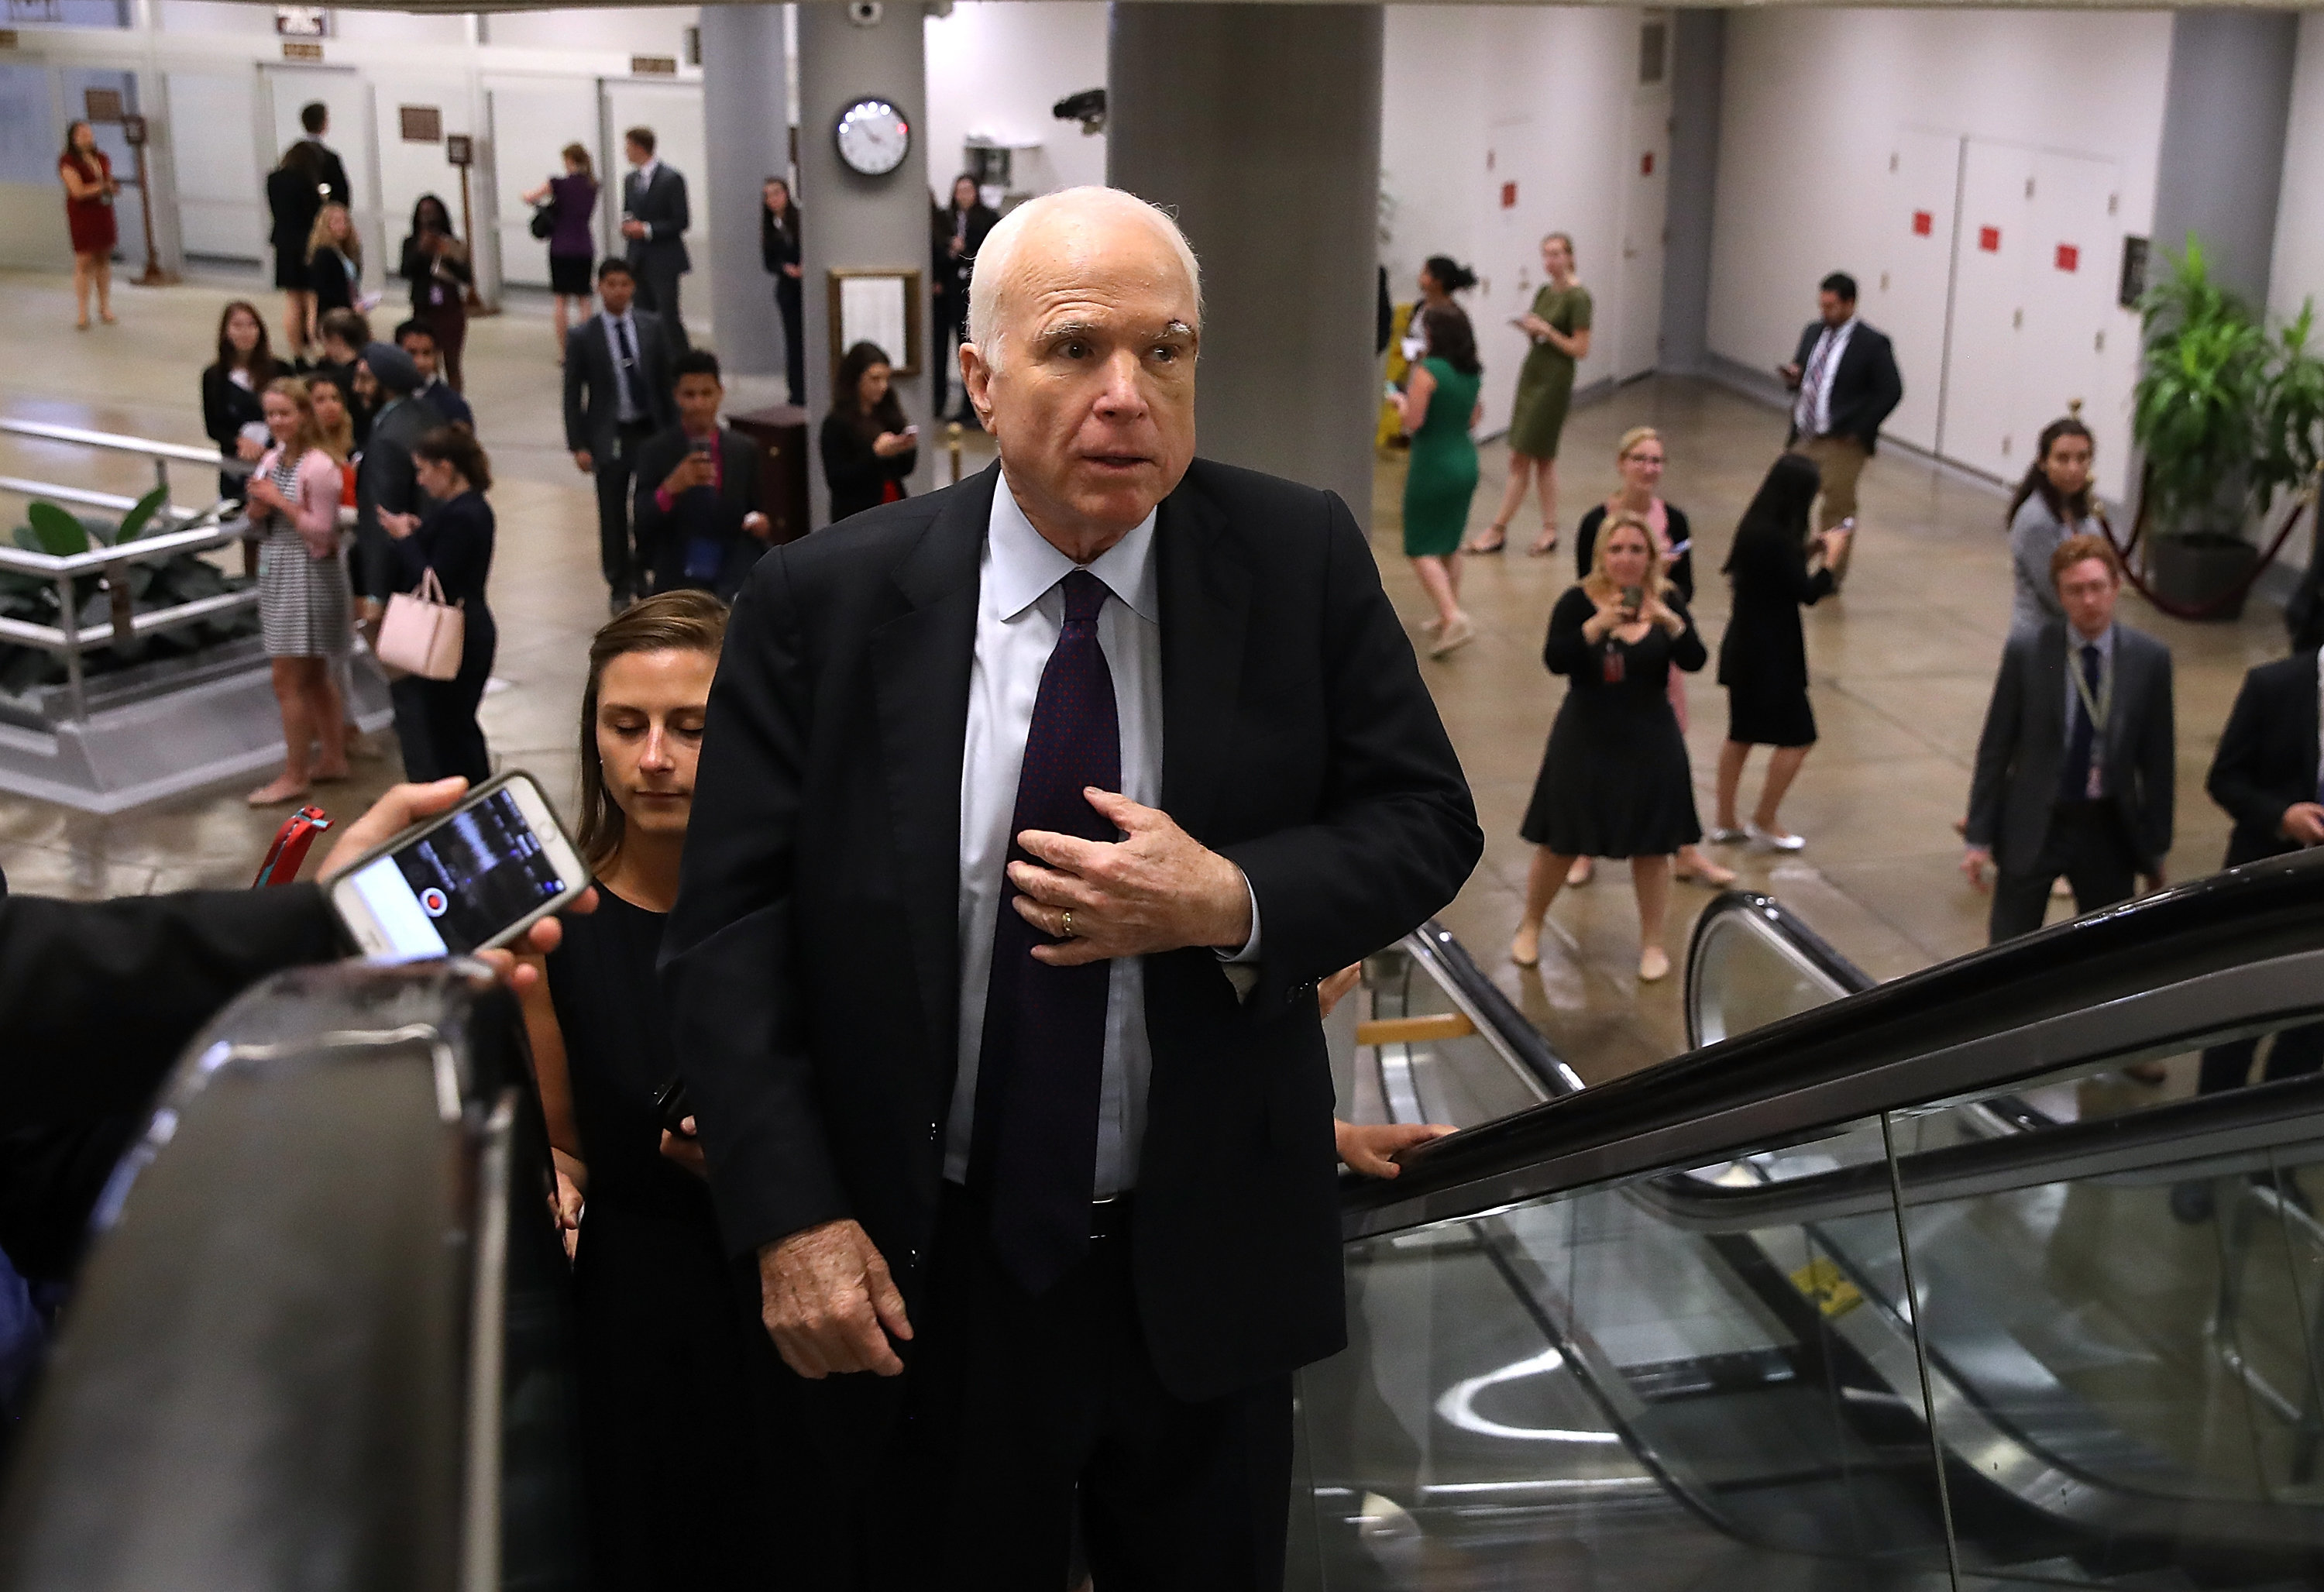 McCain returns home for cancer treatment